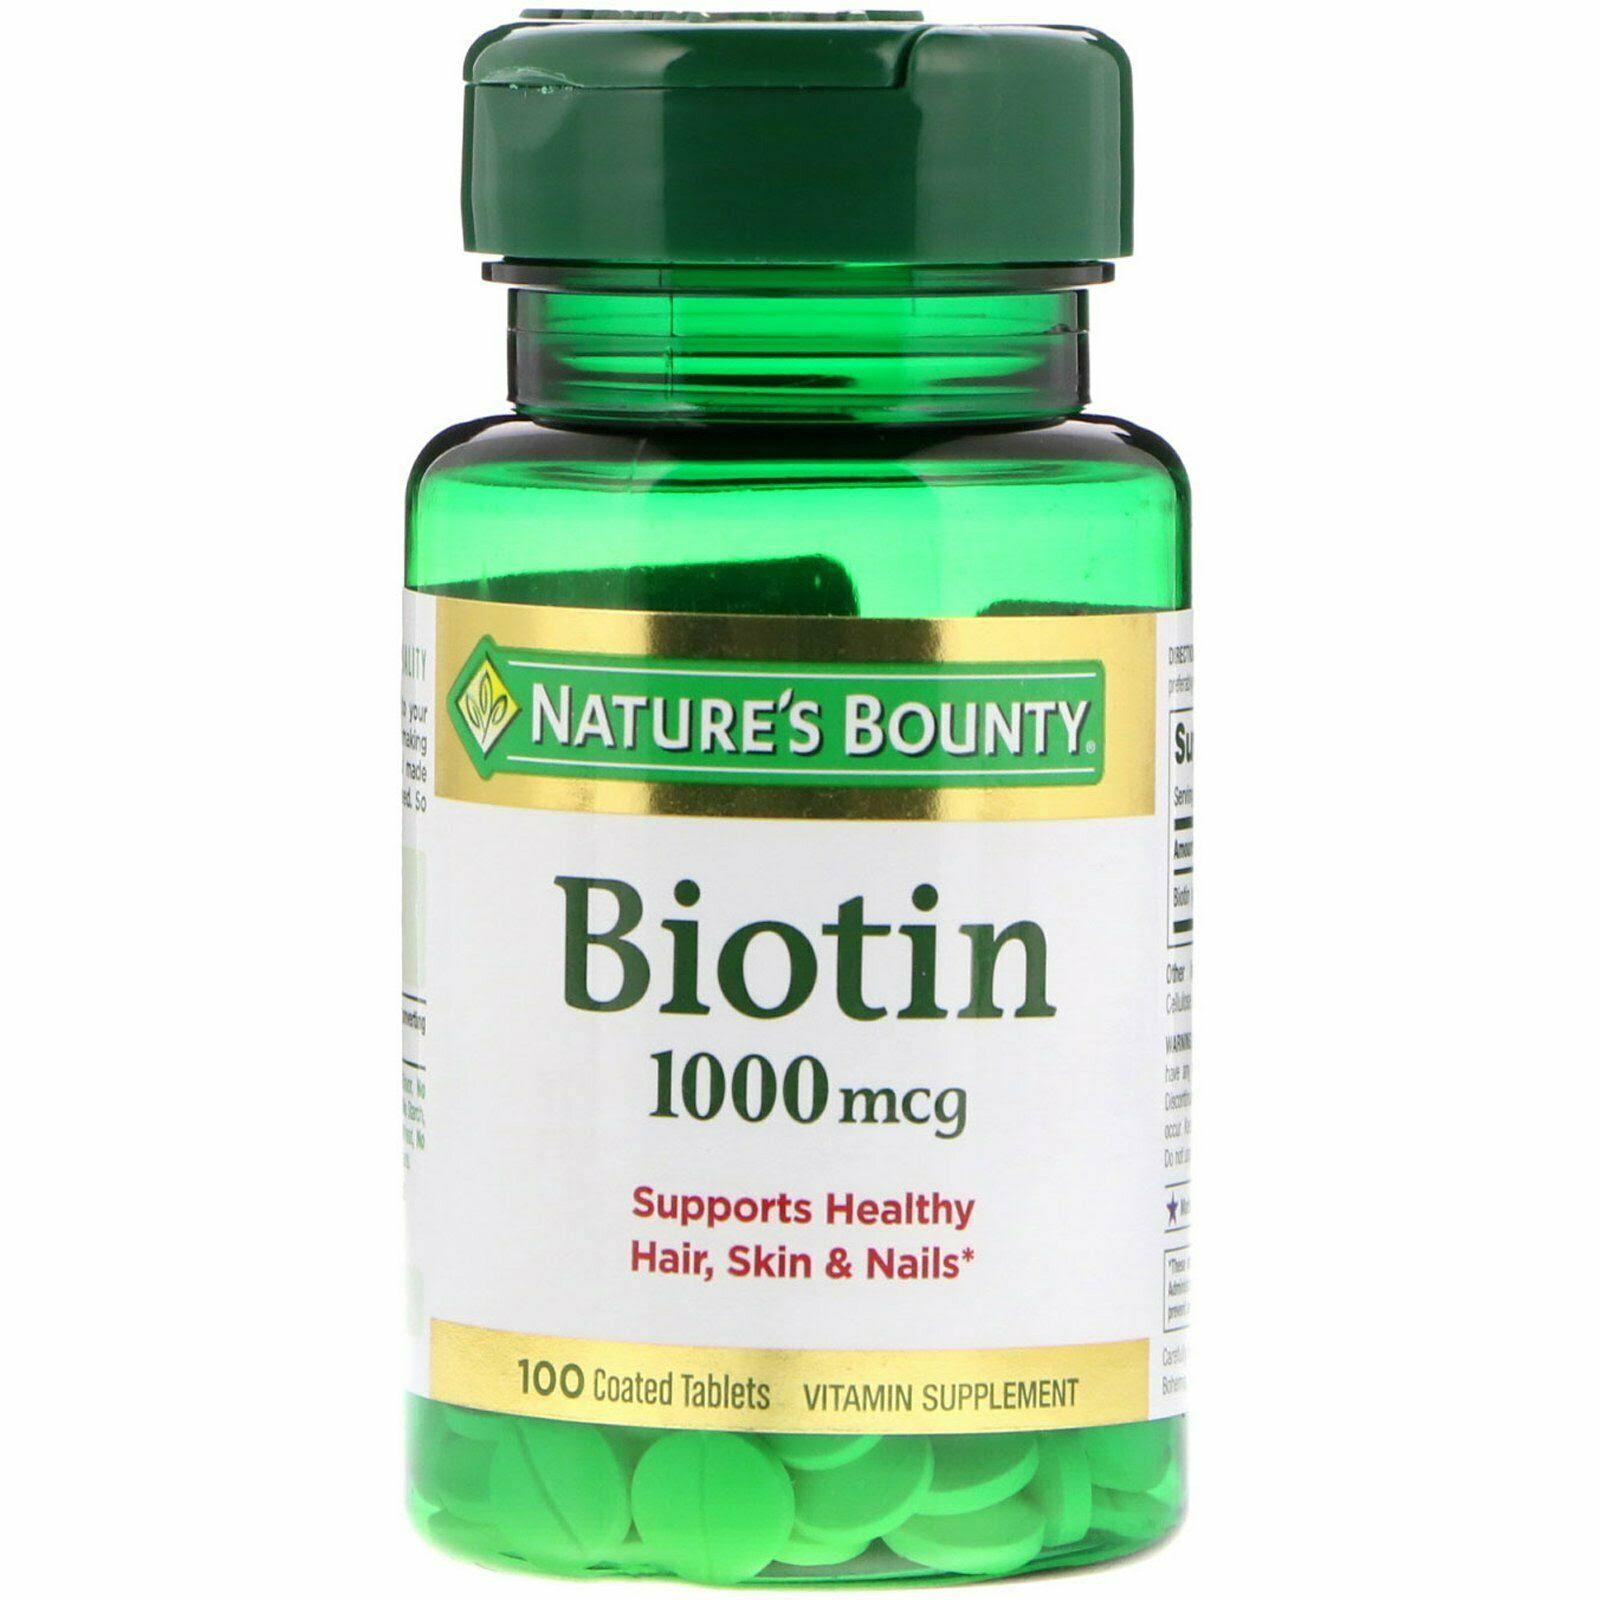 Nature's Bounty Biotin Vitamin Supplement - 100 Tablets